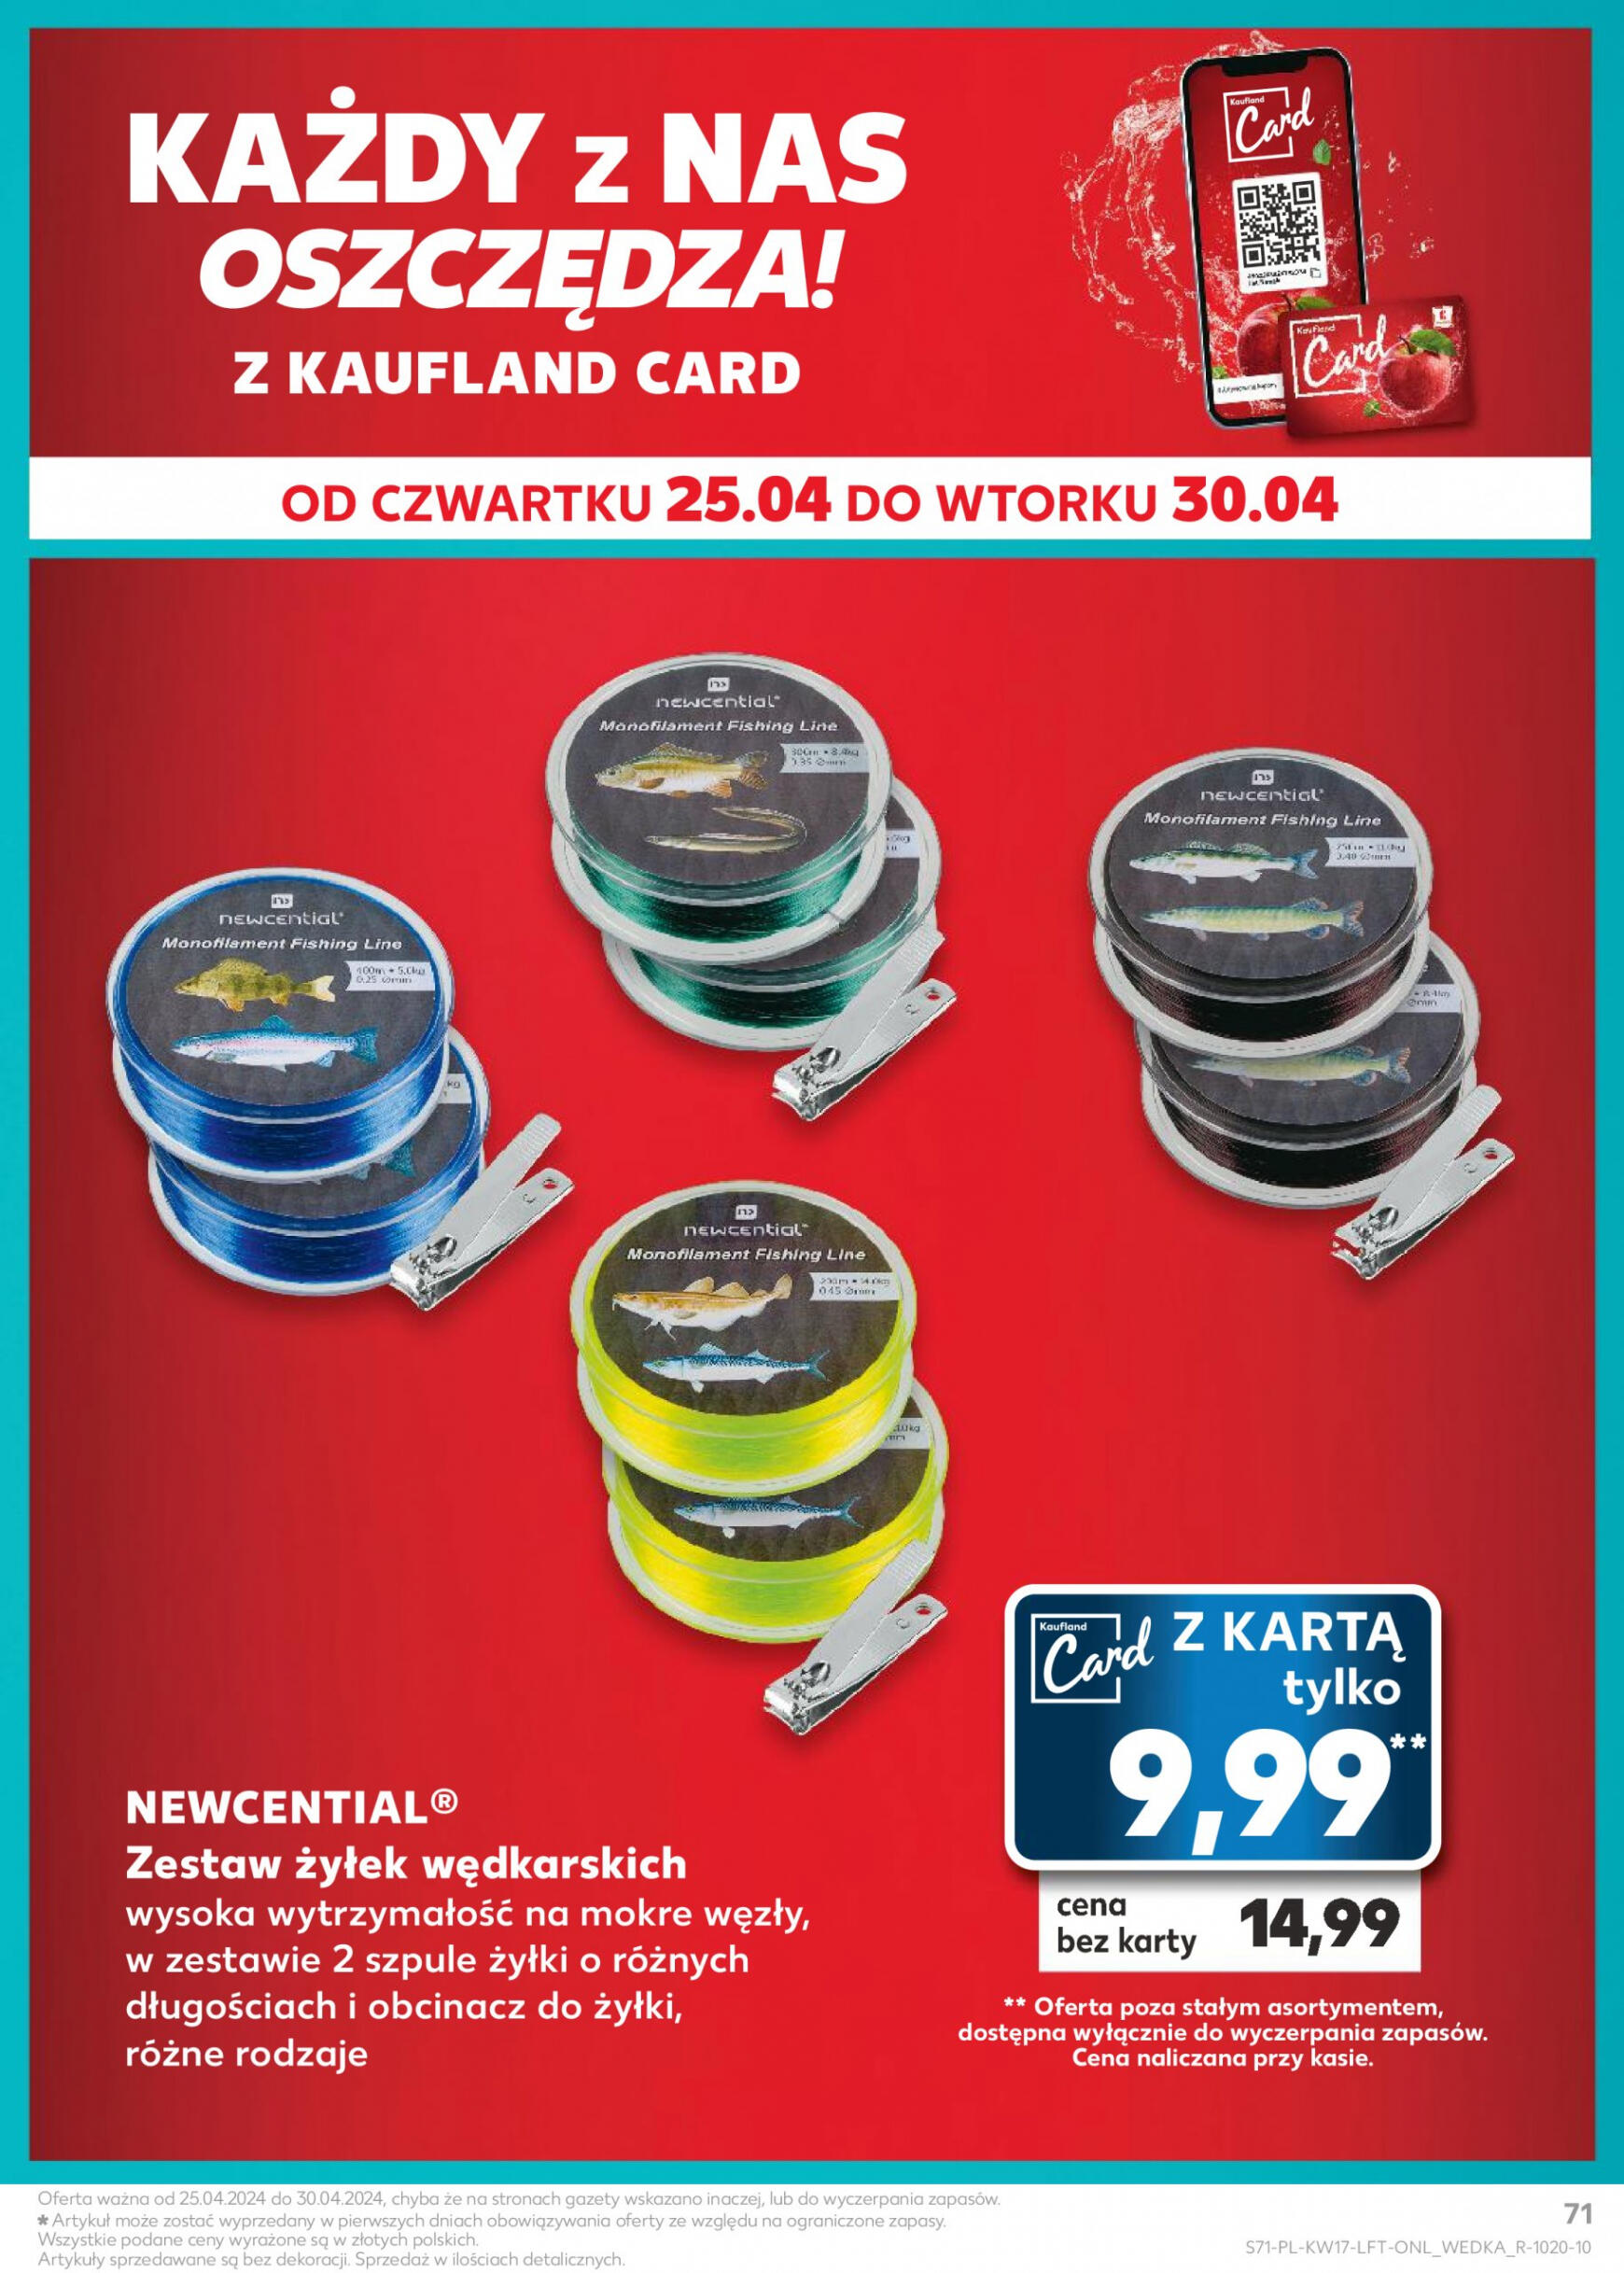 kaufland - Kaufland gazetka aktualna ważna od 25.04. - 30.04. - page: 71